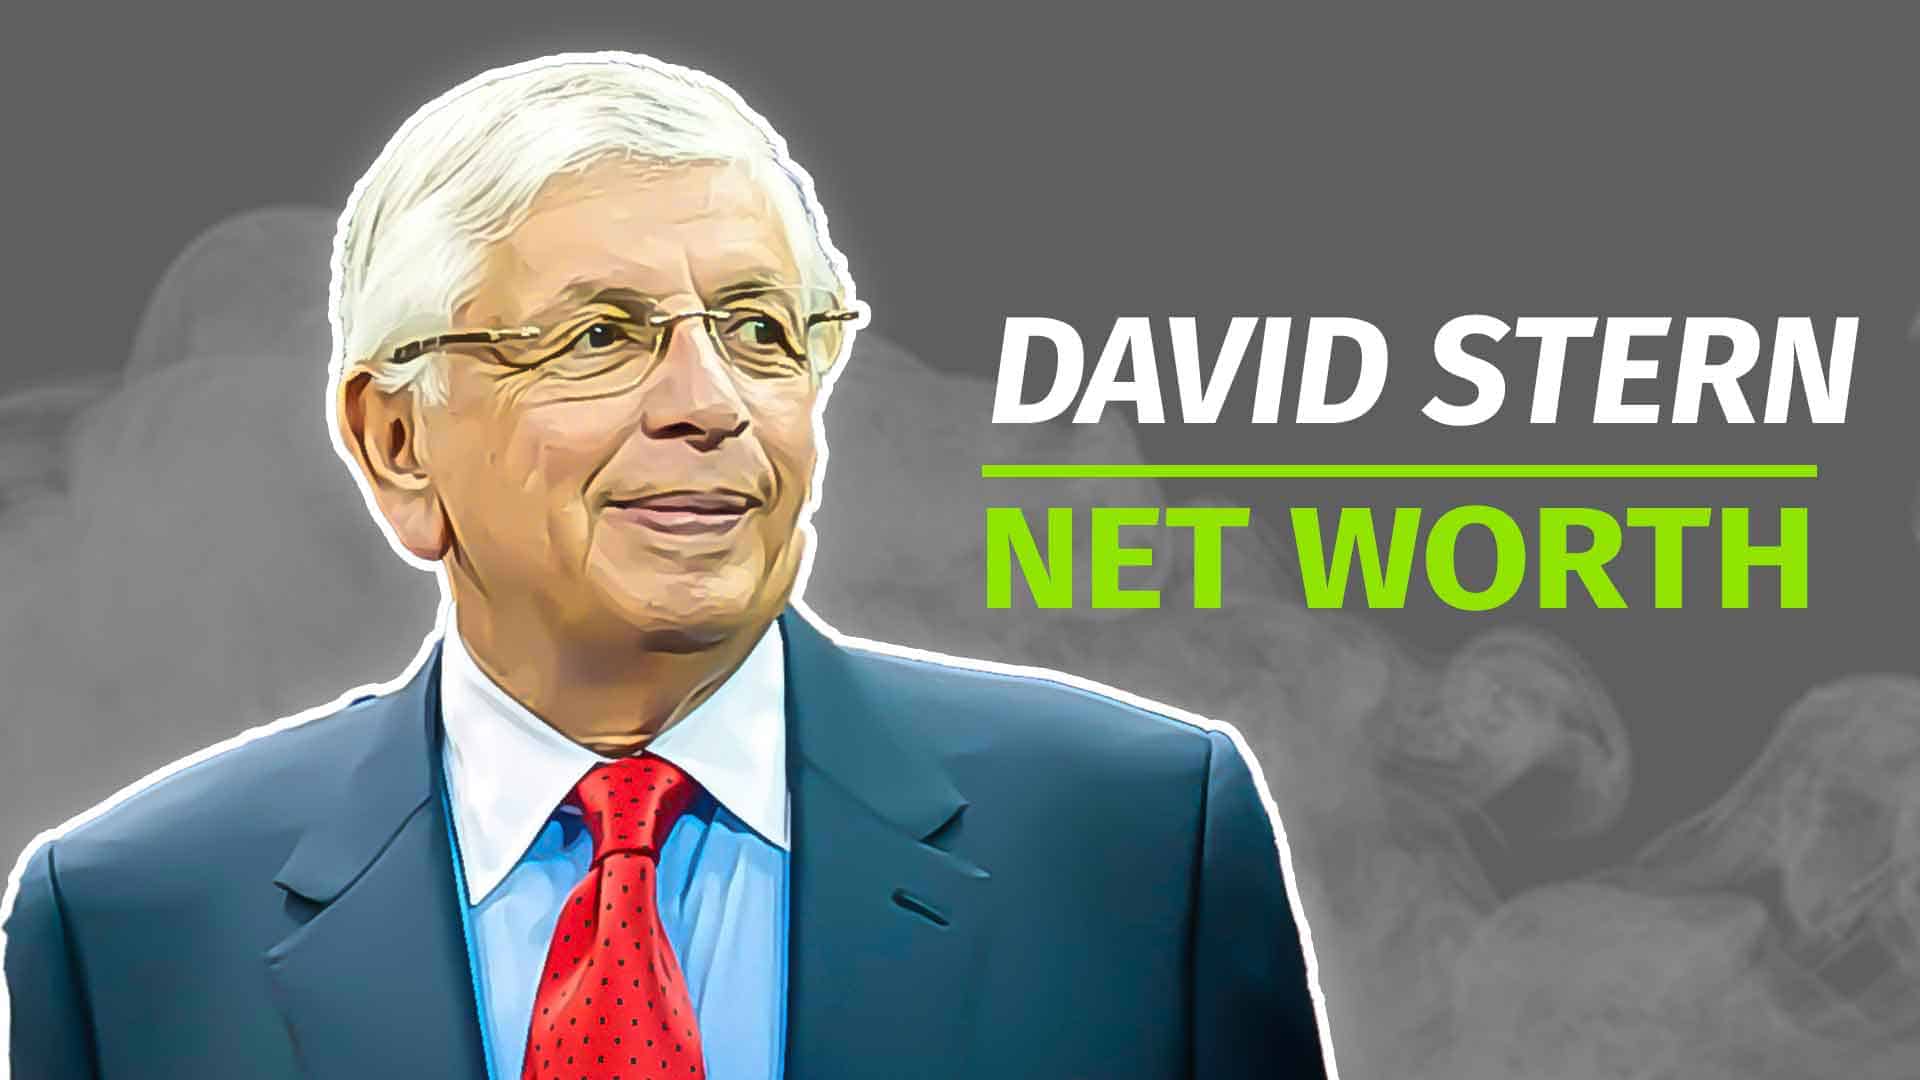 David Stern net worth